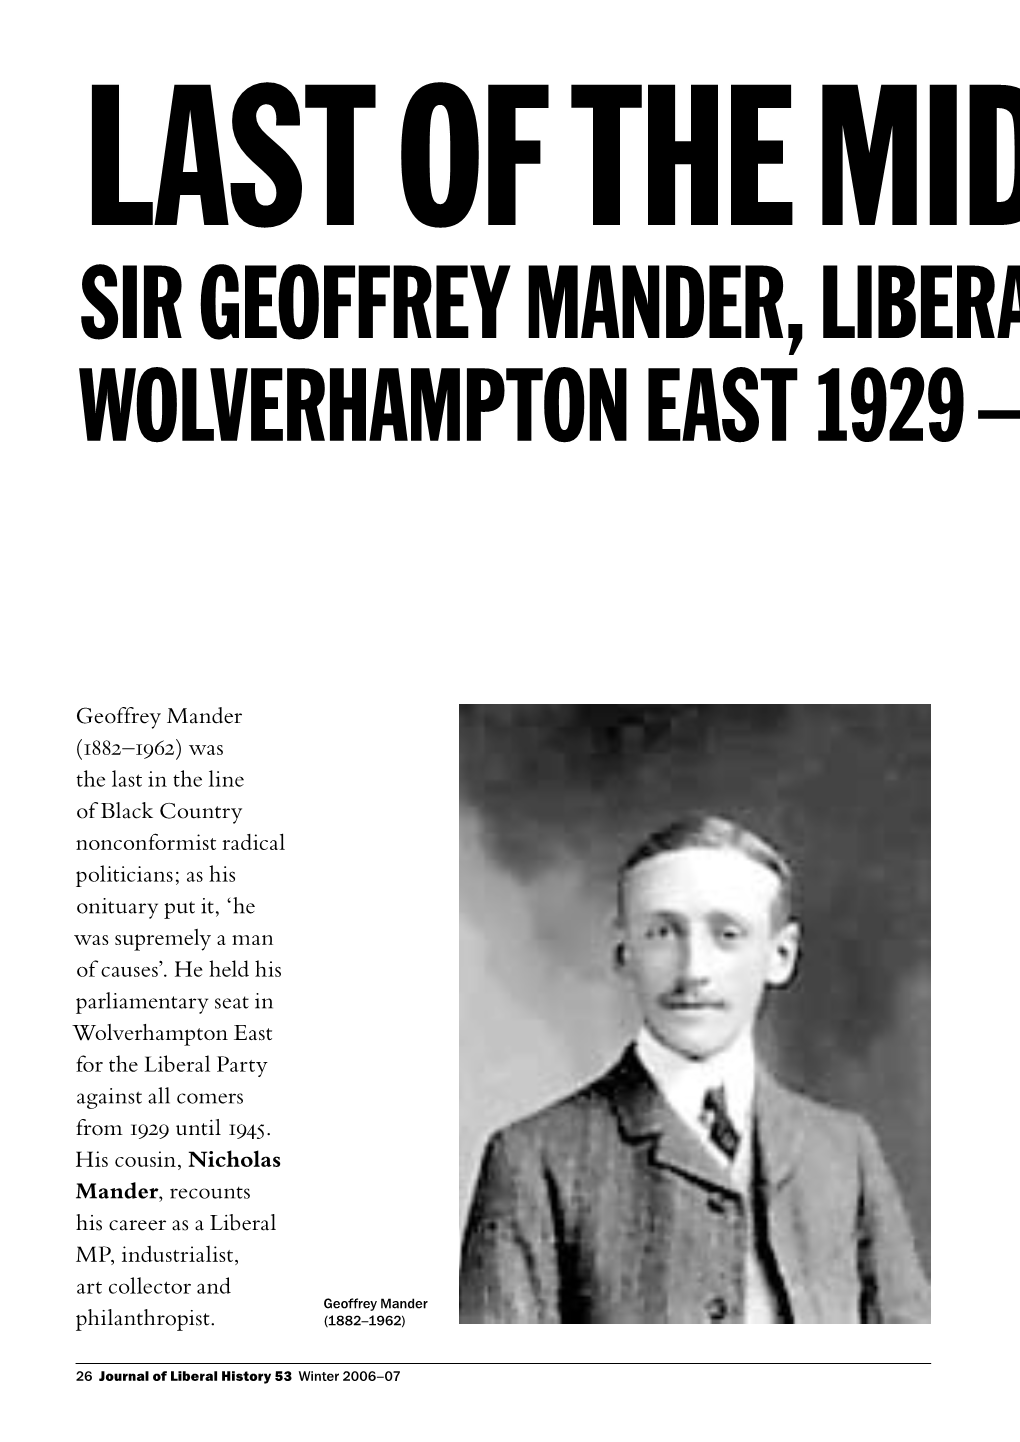 Sir Geoffrey Mander, Liberal MP for Wolverhampton East 1929 – 45